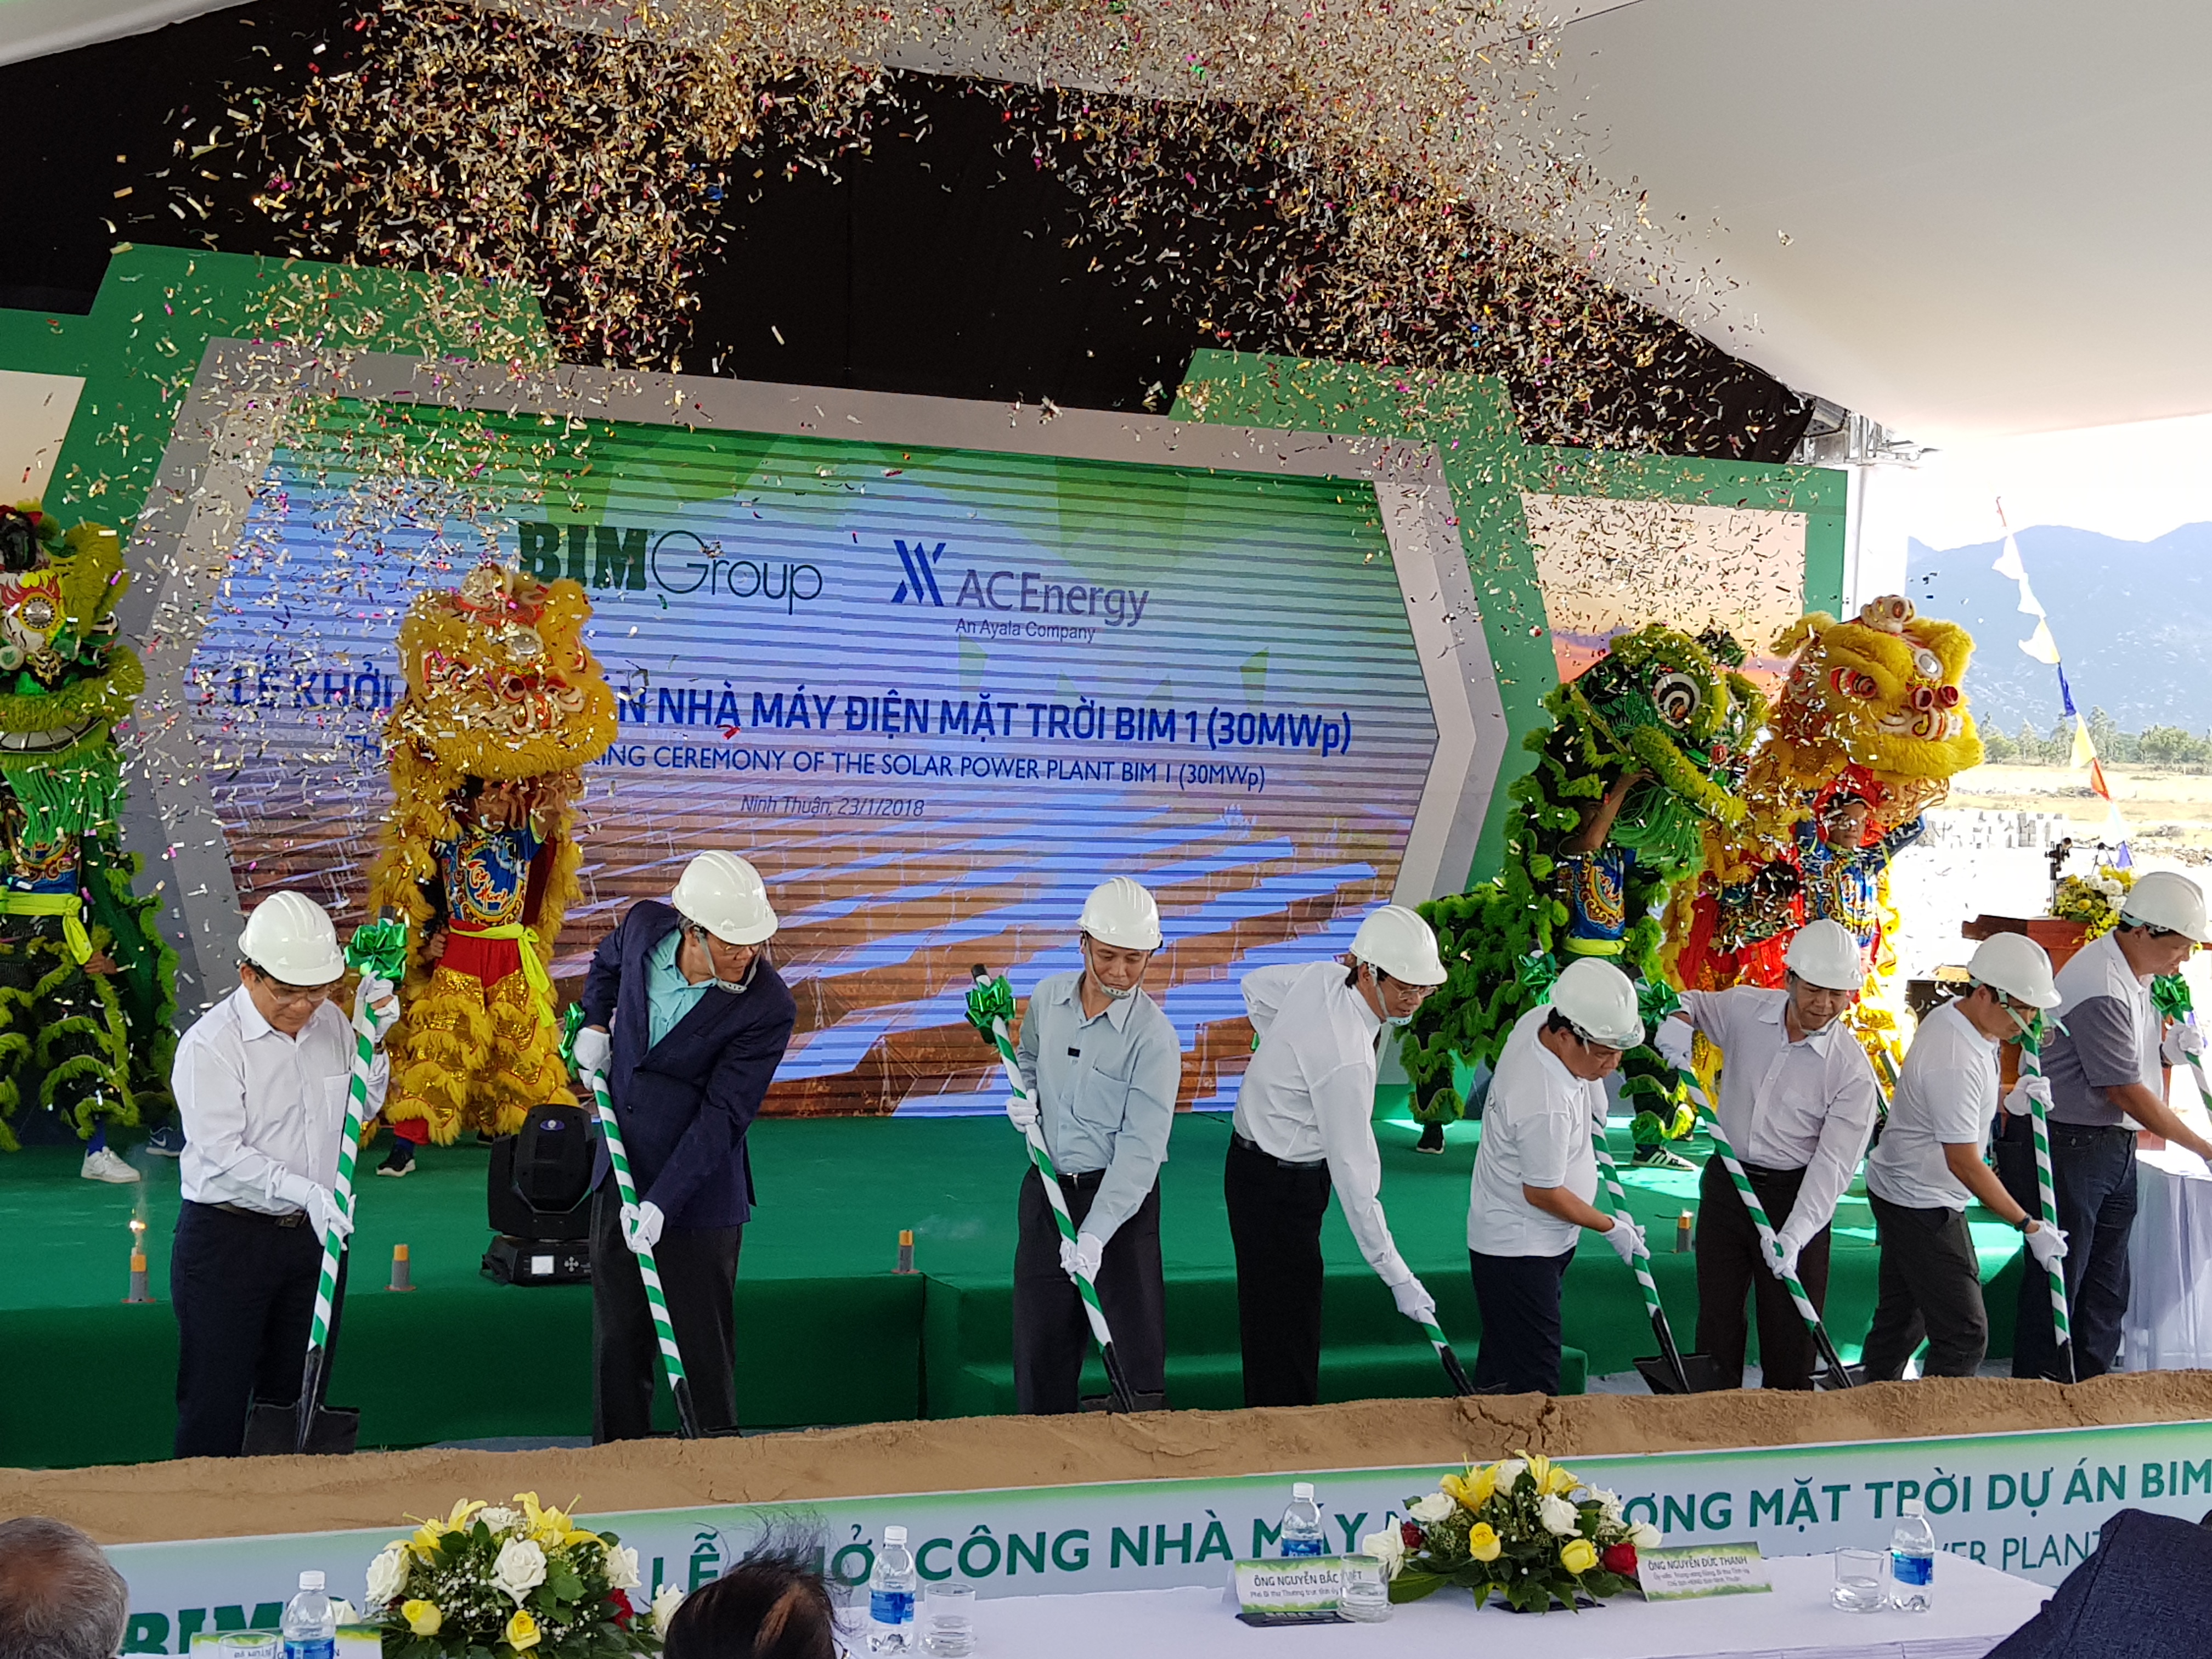 bim group kicks off 35 million solar power project in ninh thuan